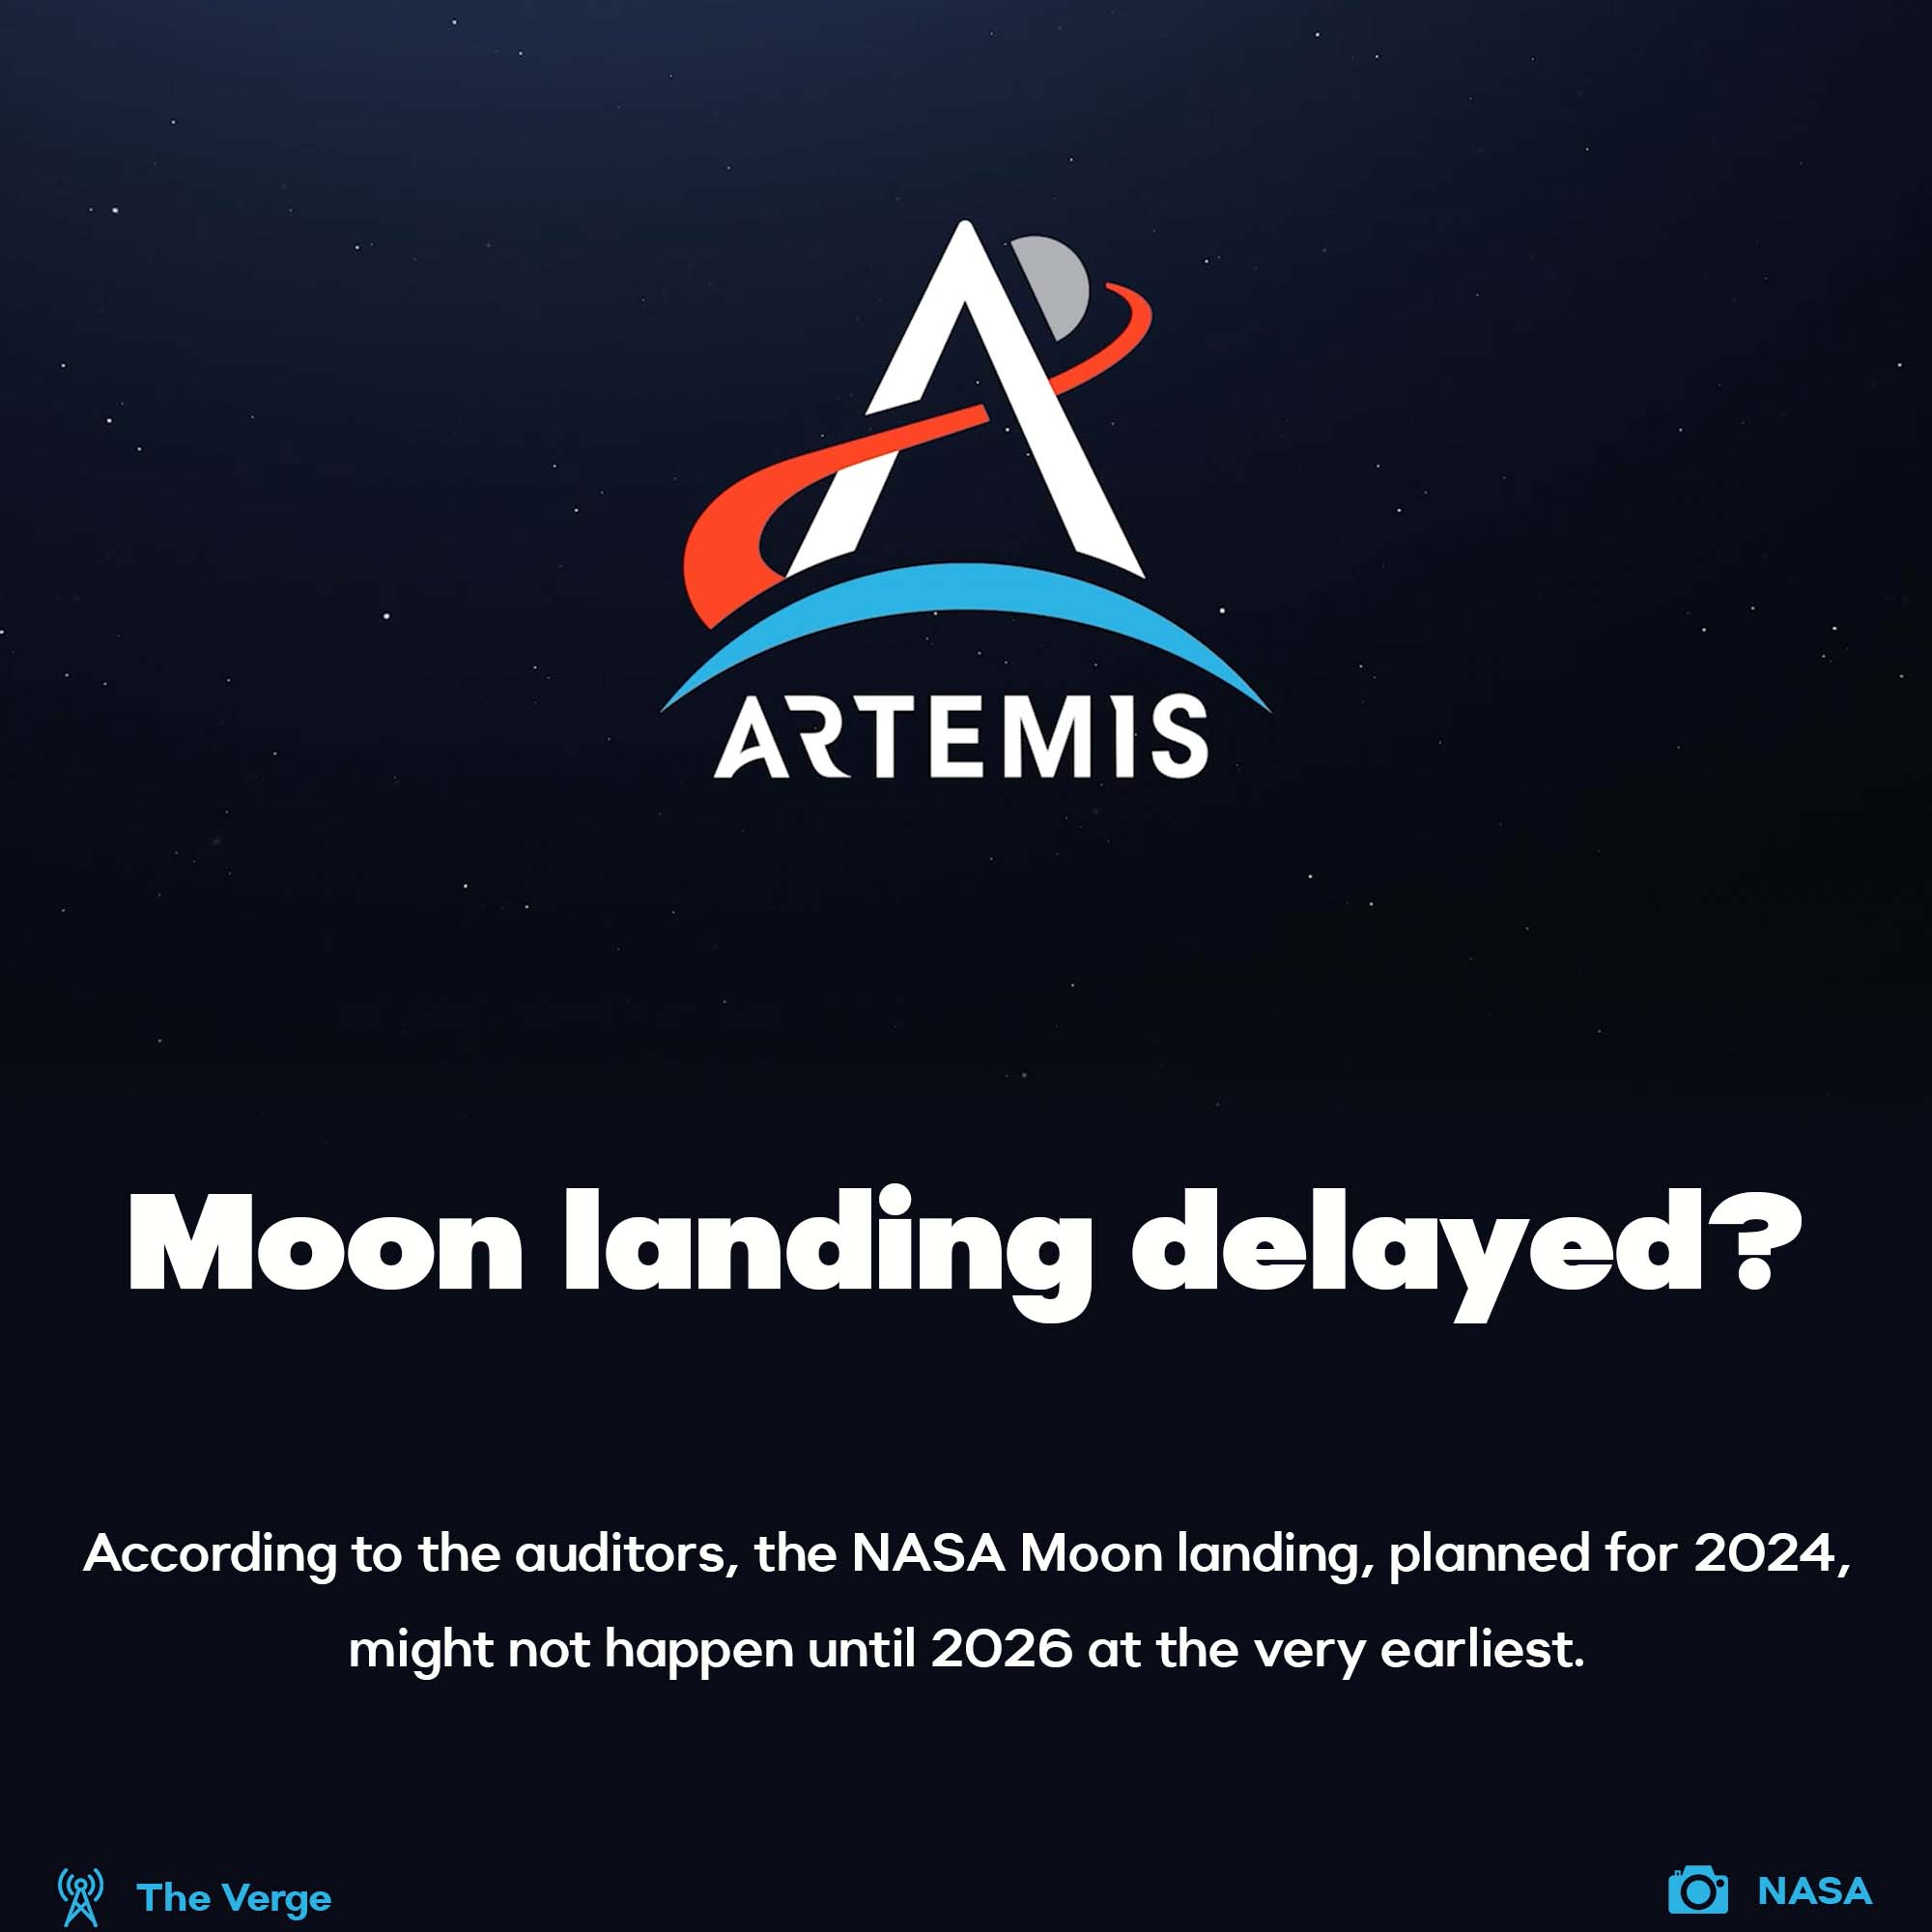 Moon landing delayed?